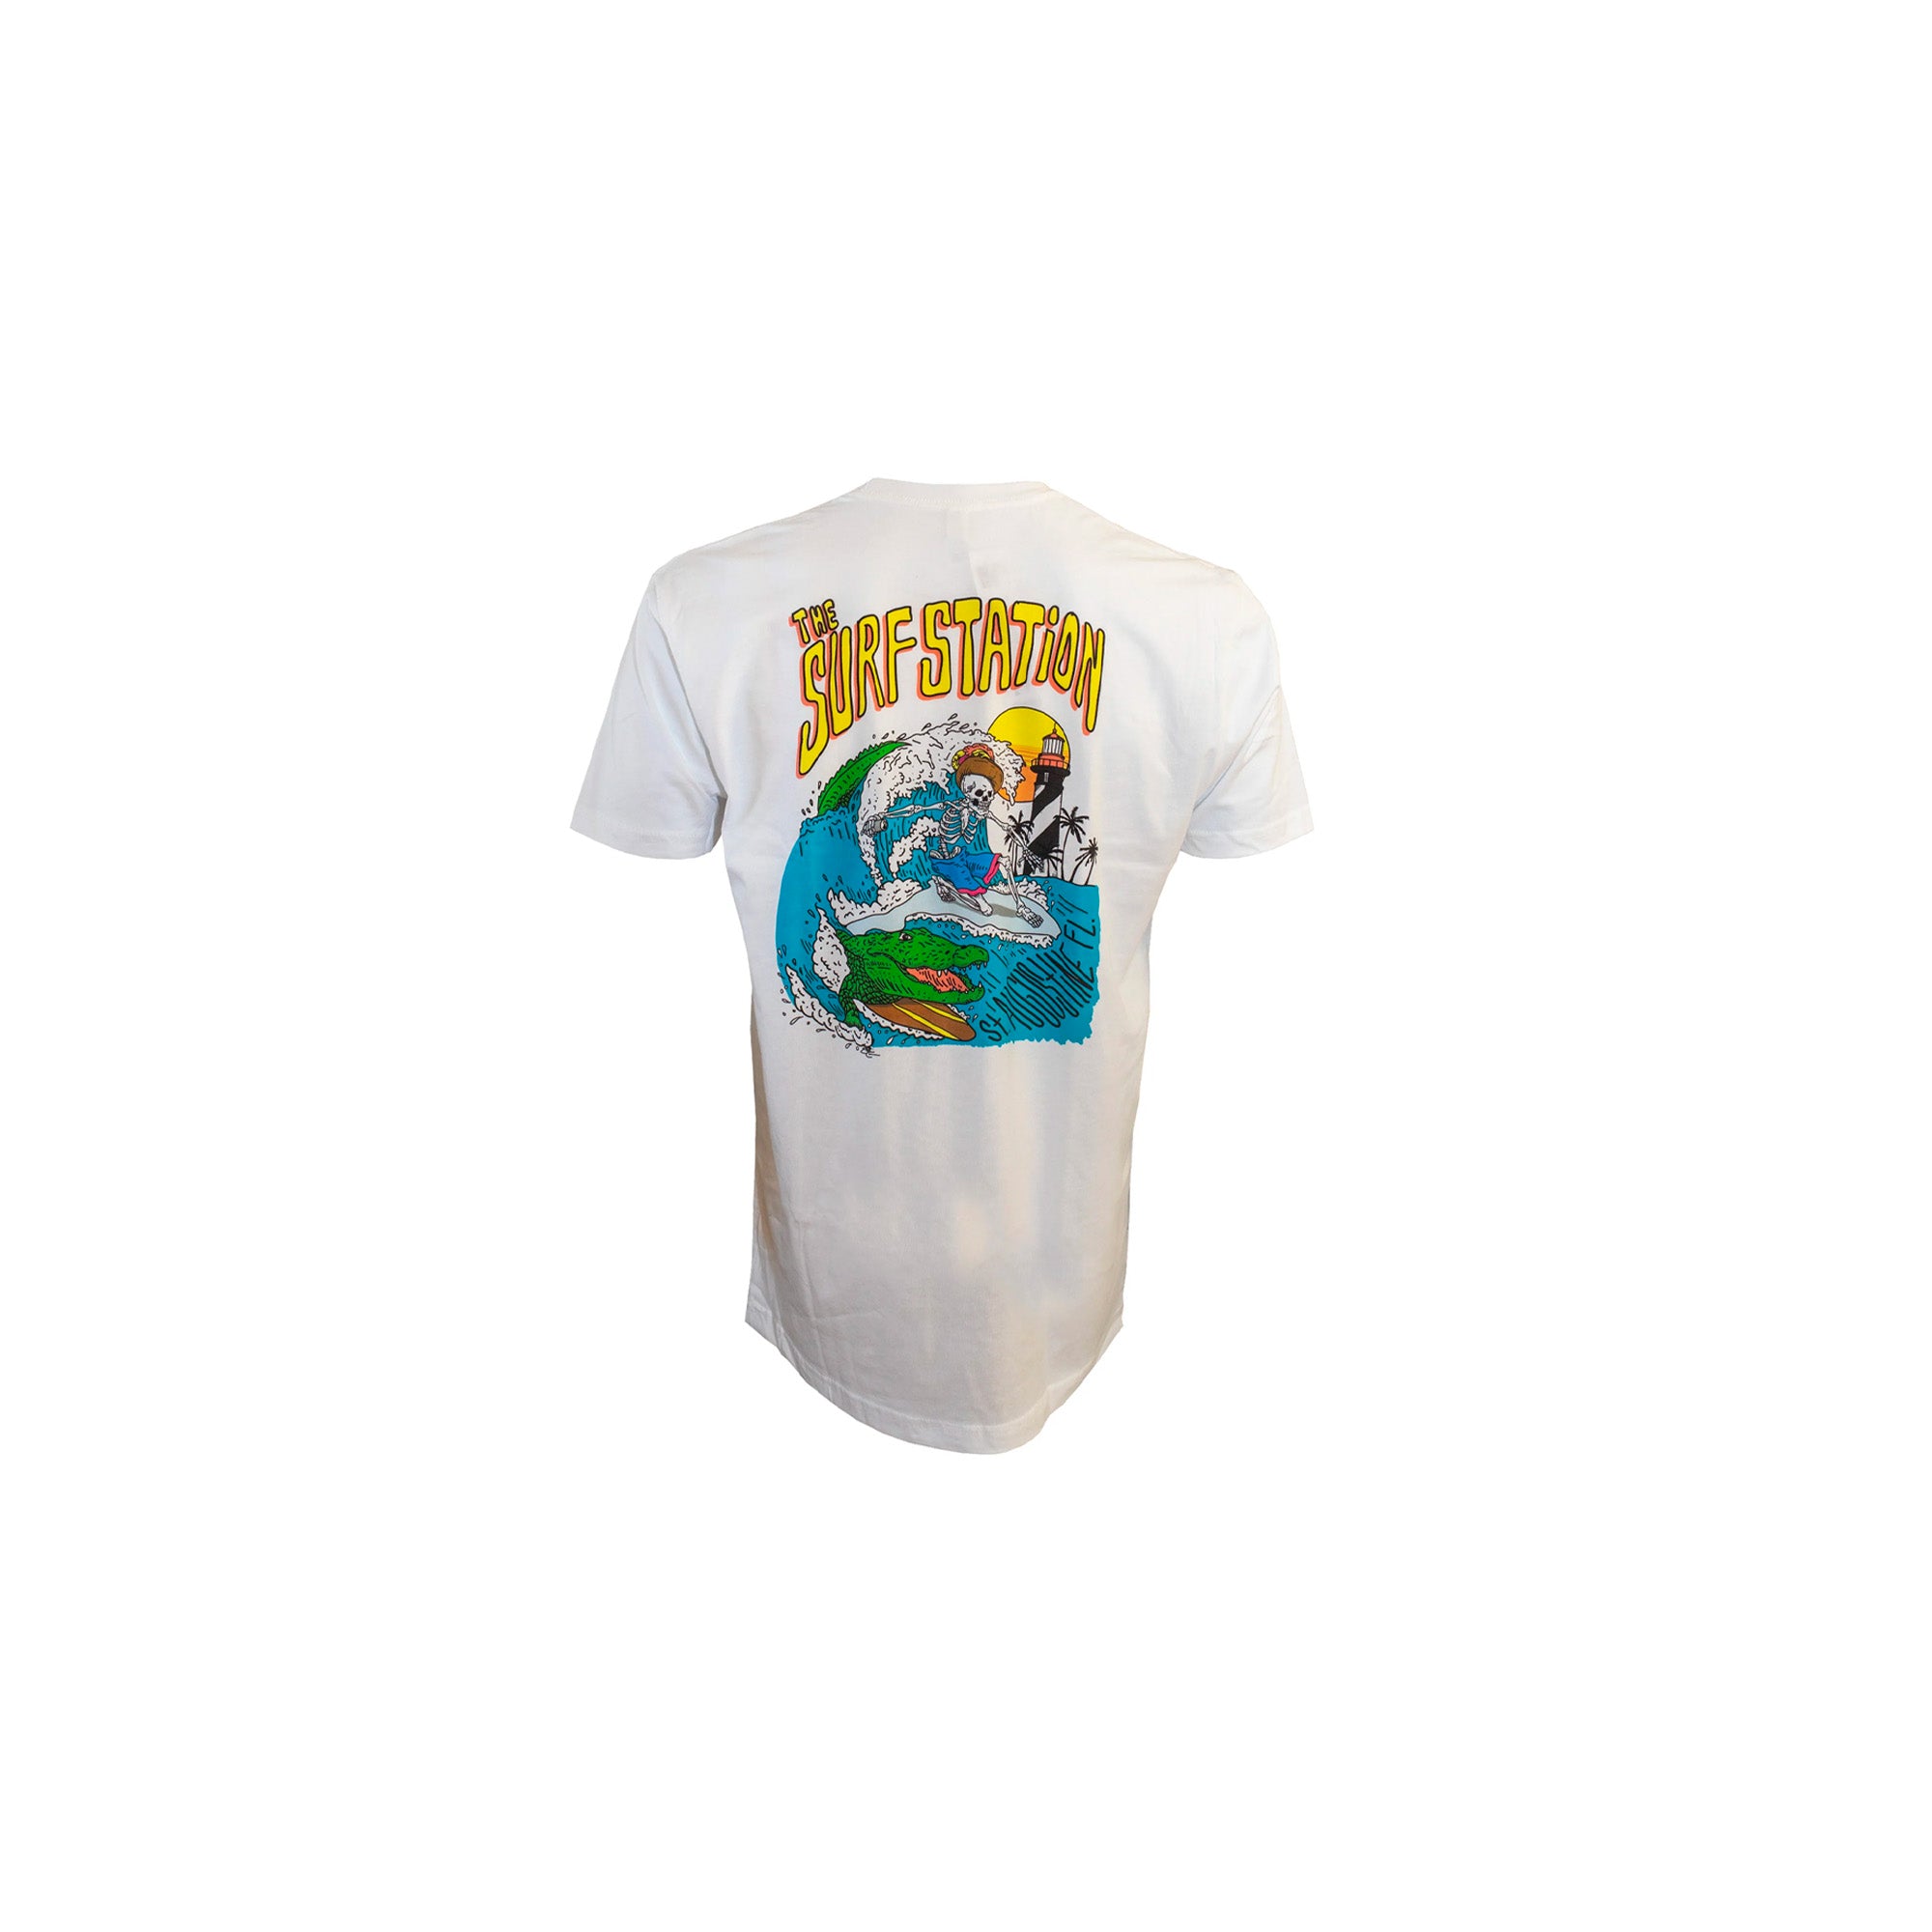 Surf Station Skeleton Gator Toddler S/S T-Shirt